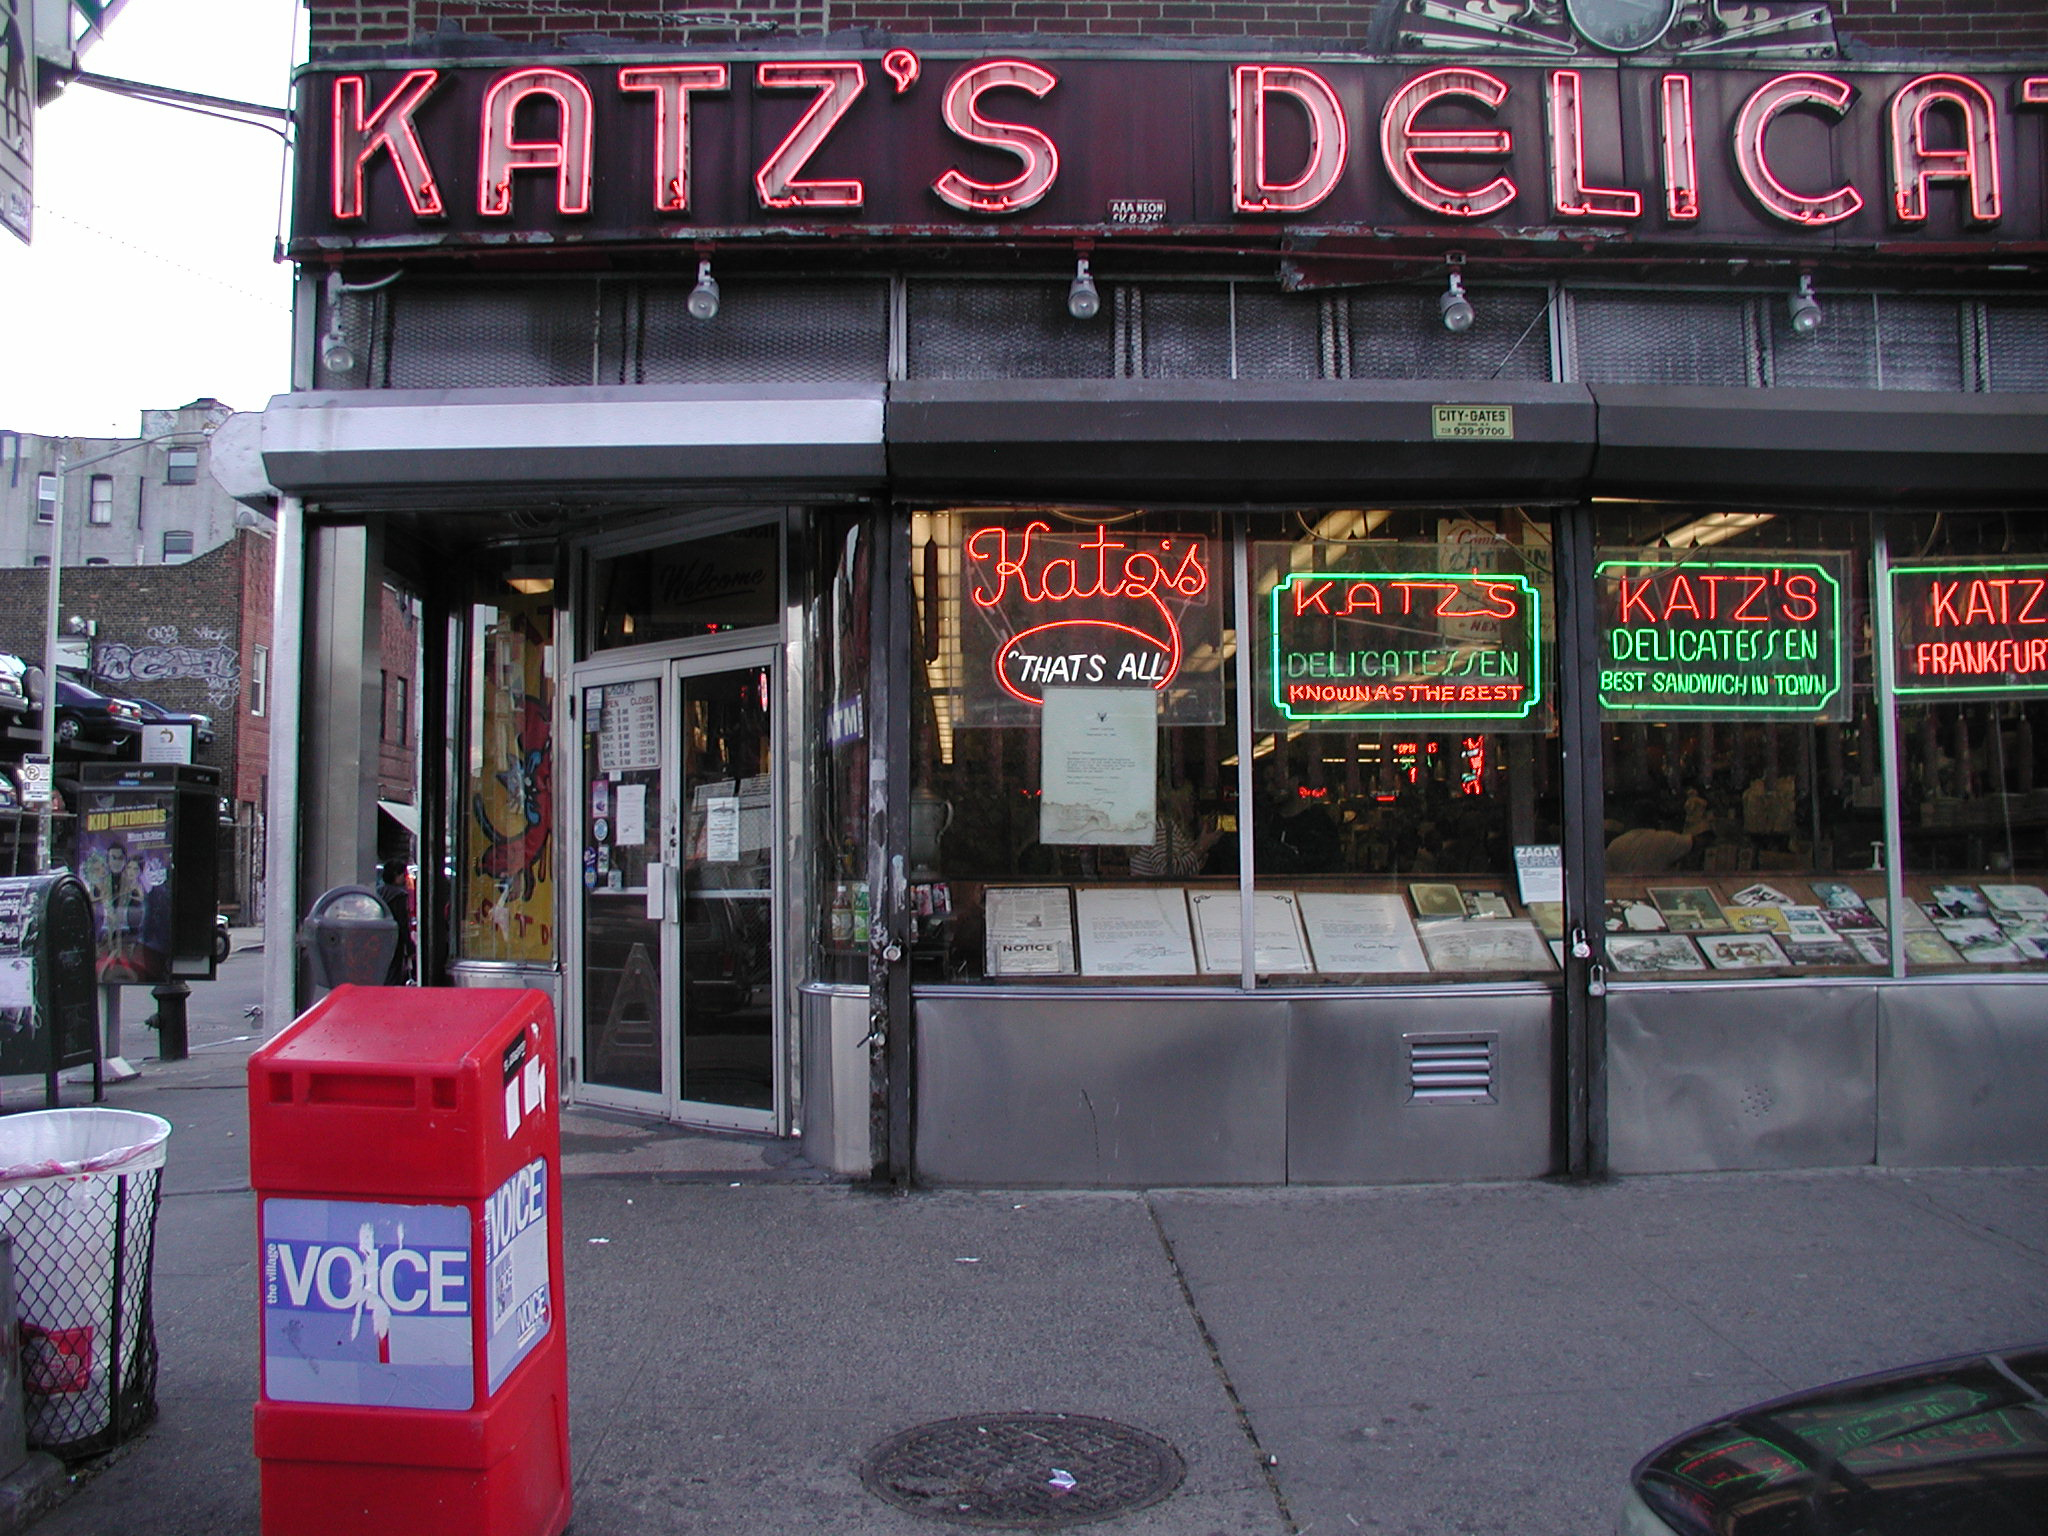 Katz's Deli on Ludow street, Lower East Side, NYC. World famous for Pastrami sandwiches. Village Voice dispenser box, left.